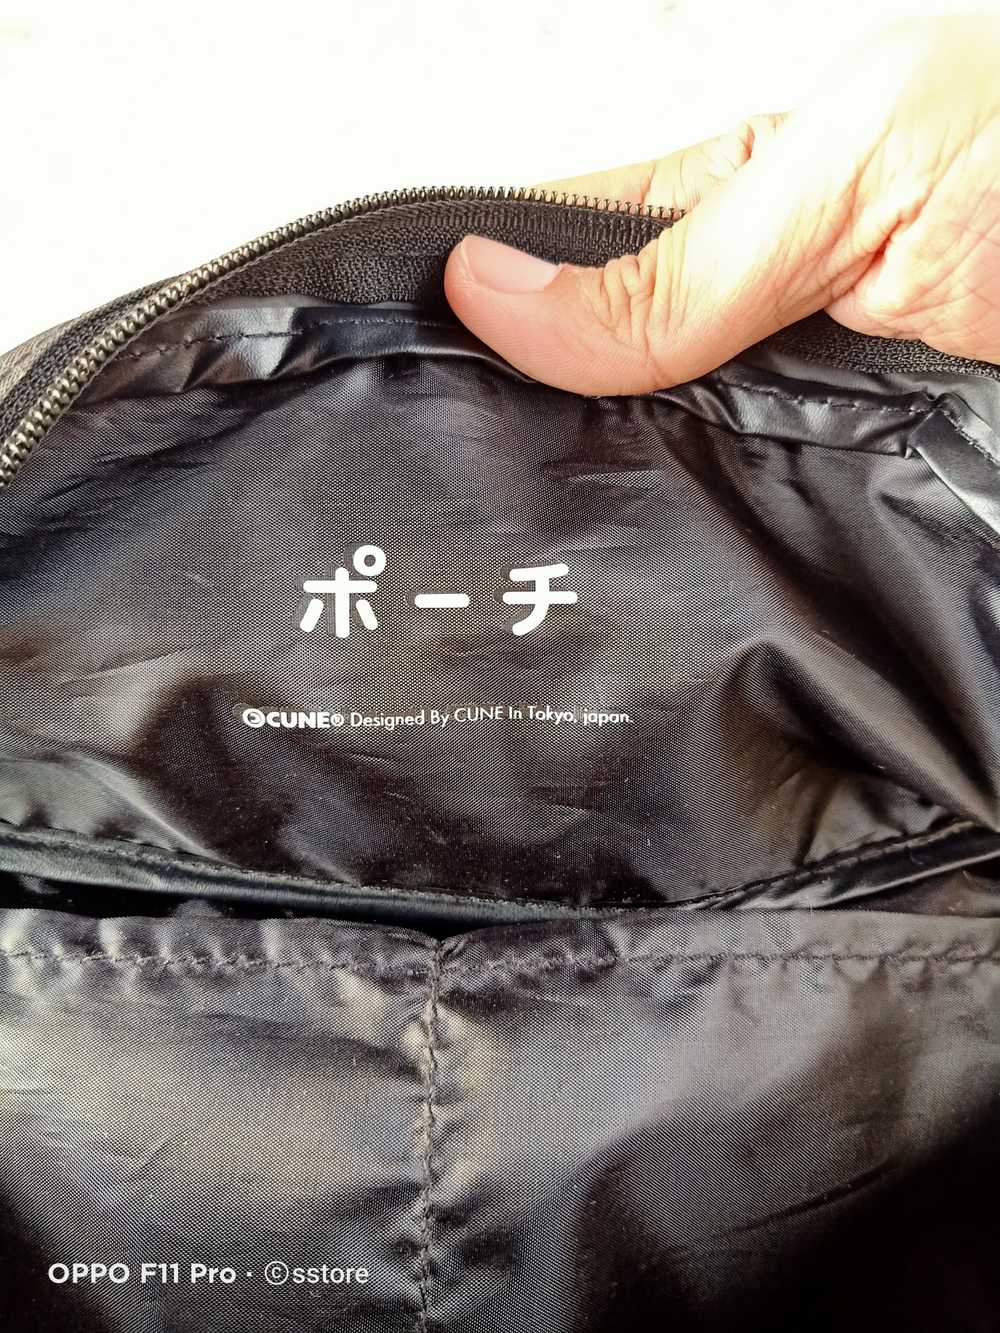 Japanese Brand Cune Waist Bag - image 10